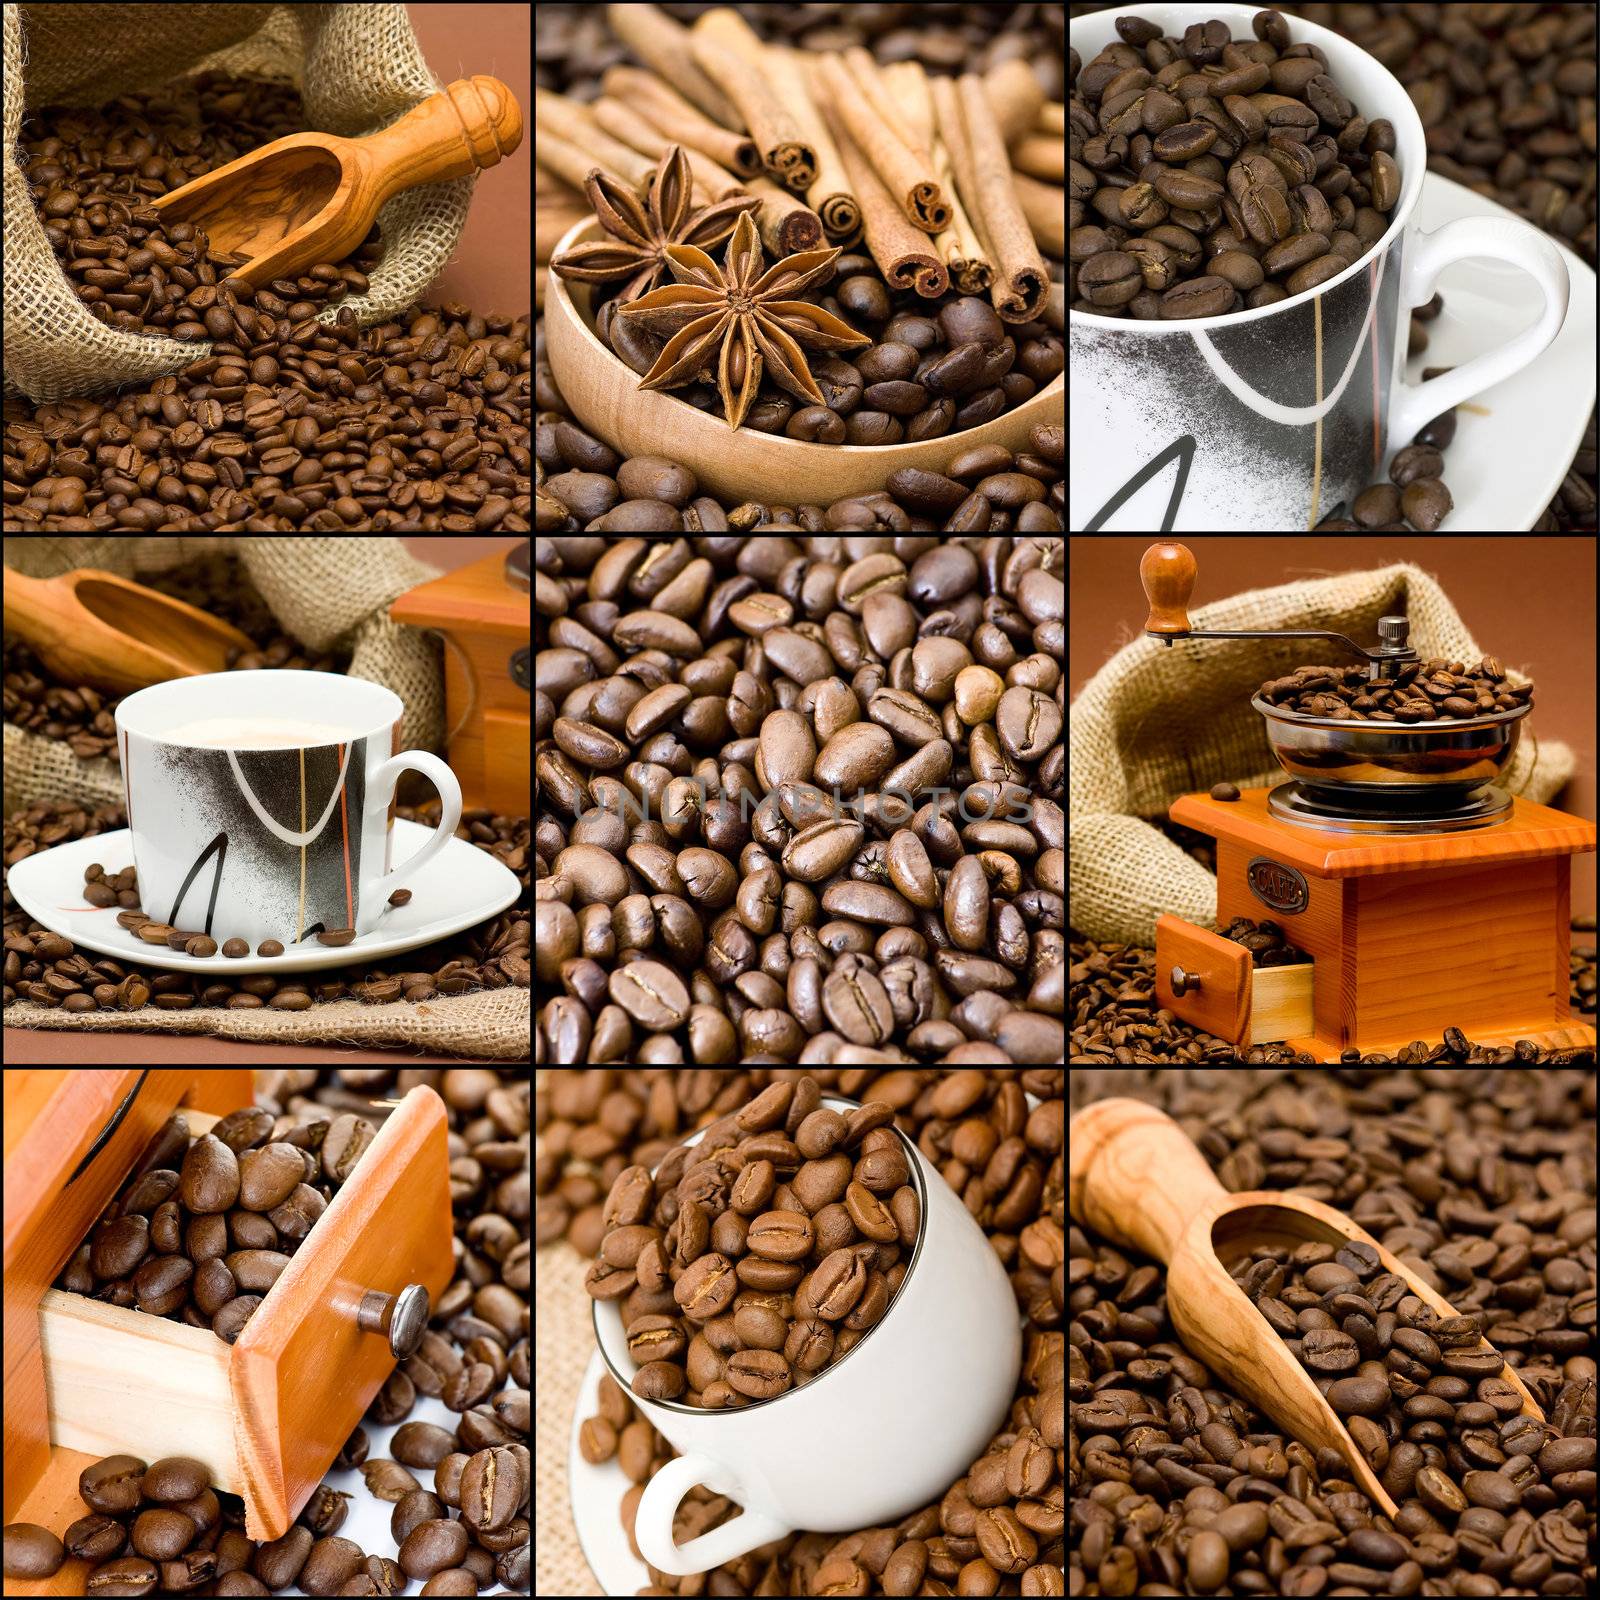 coffee collage by miradrozdowski